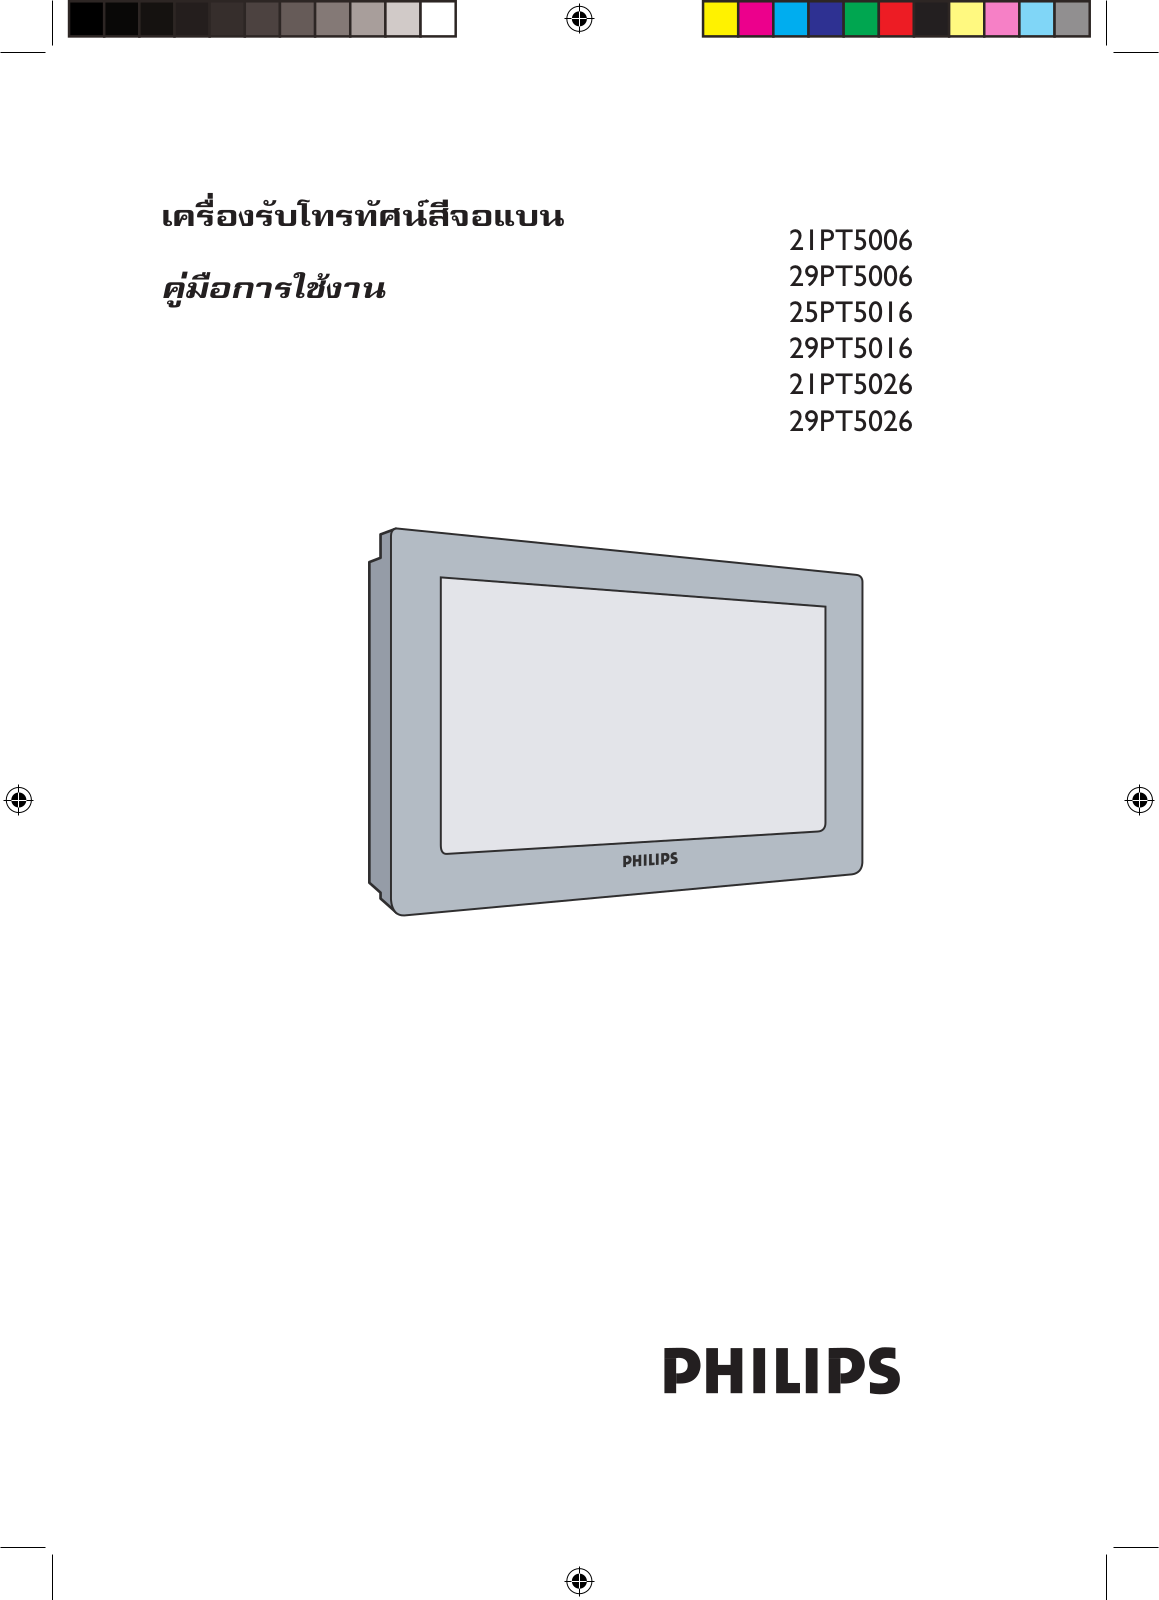 PHILIPS 21PT5026 User Manual